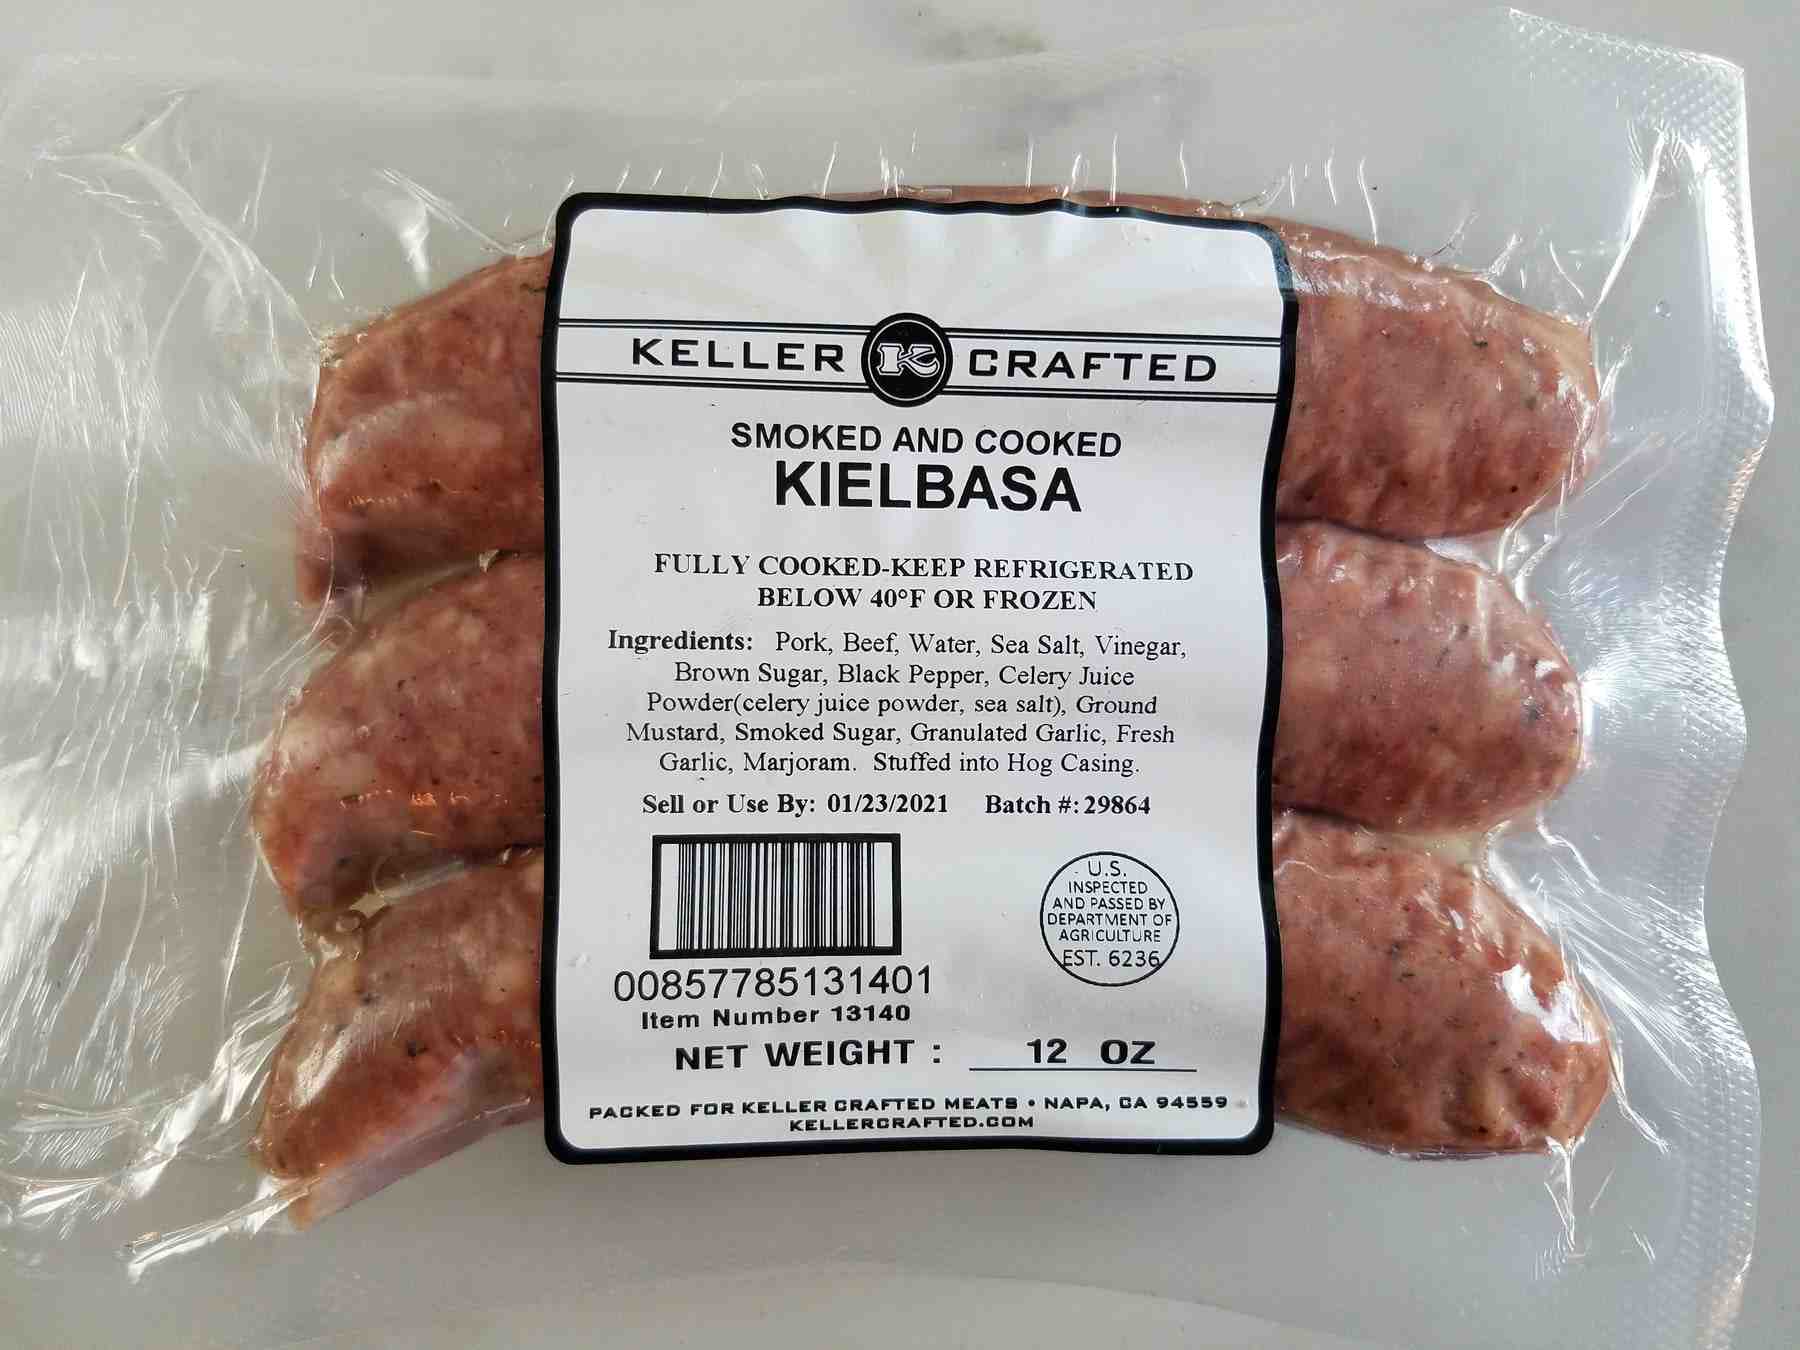 What is beef kielbasa?